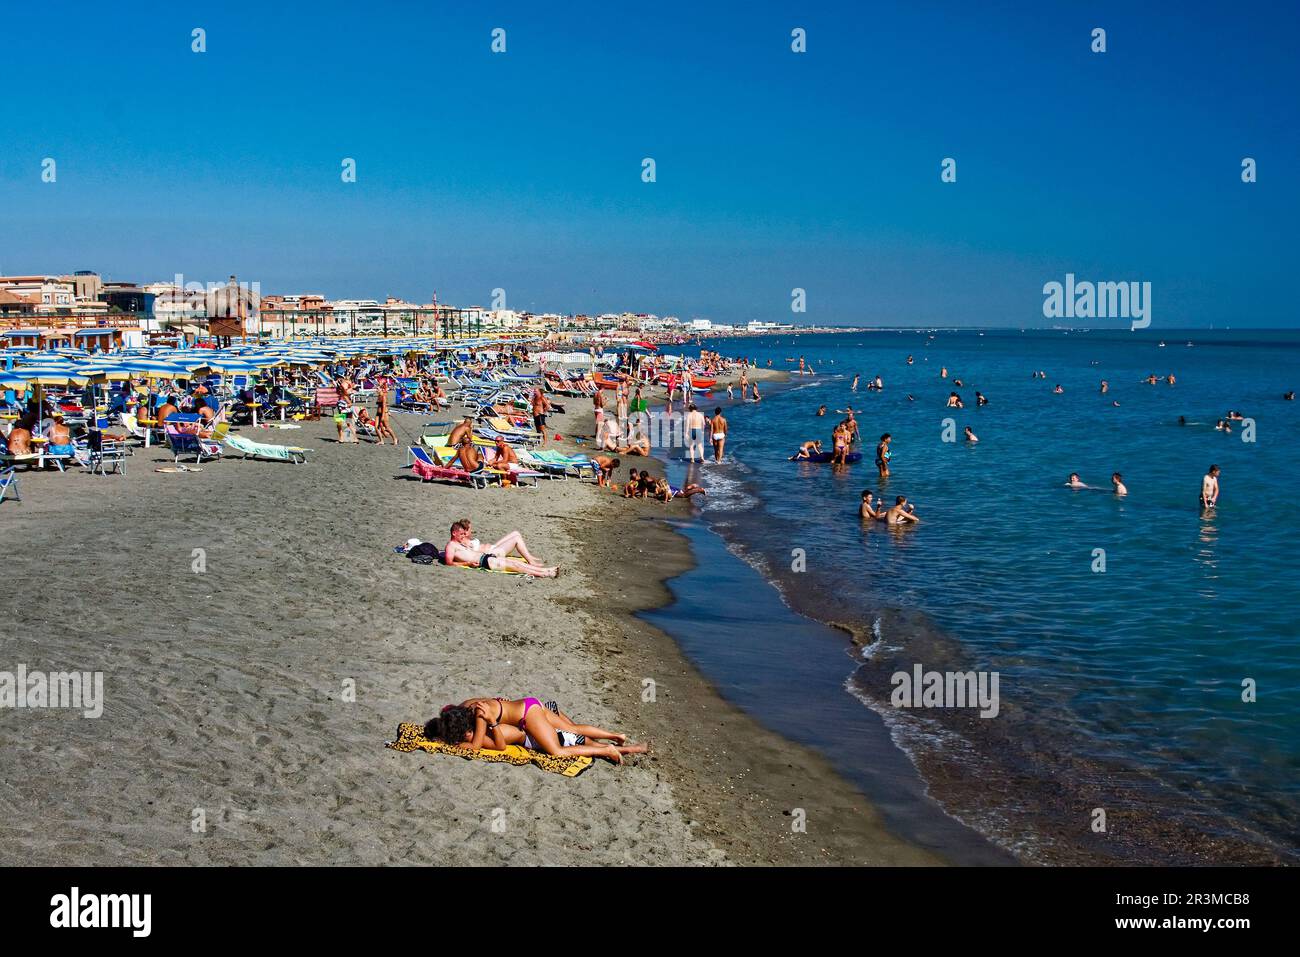 beach scene, sand, blue water, people, many umbrellas, chairs, relaxation, vacation, shoreline, swimming, Tyrrhenian Sea; Europe, Ostia; Italy; summer Stock Photo